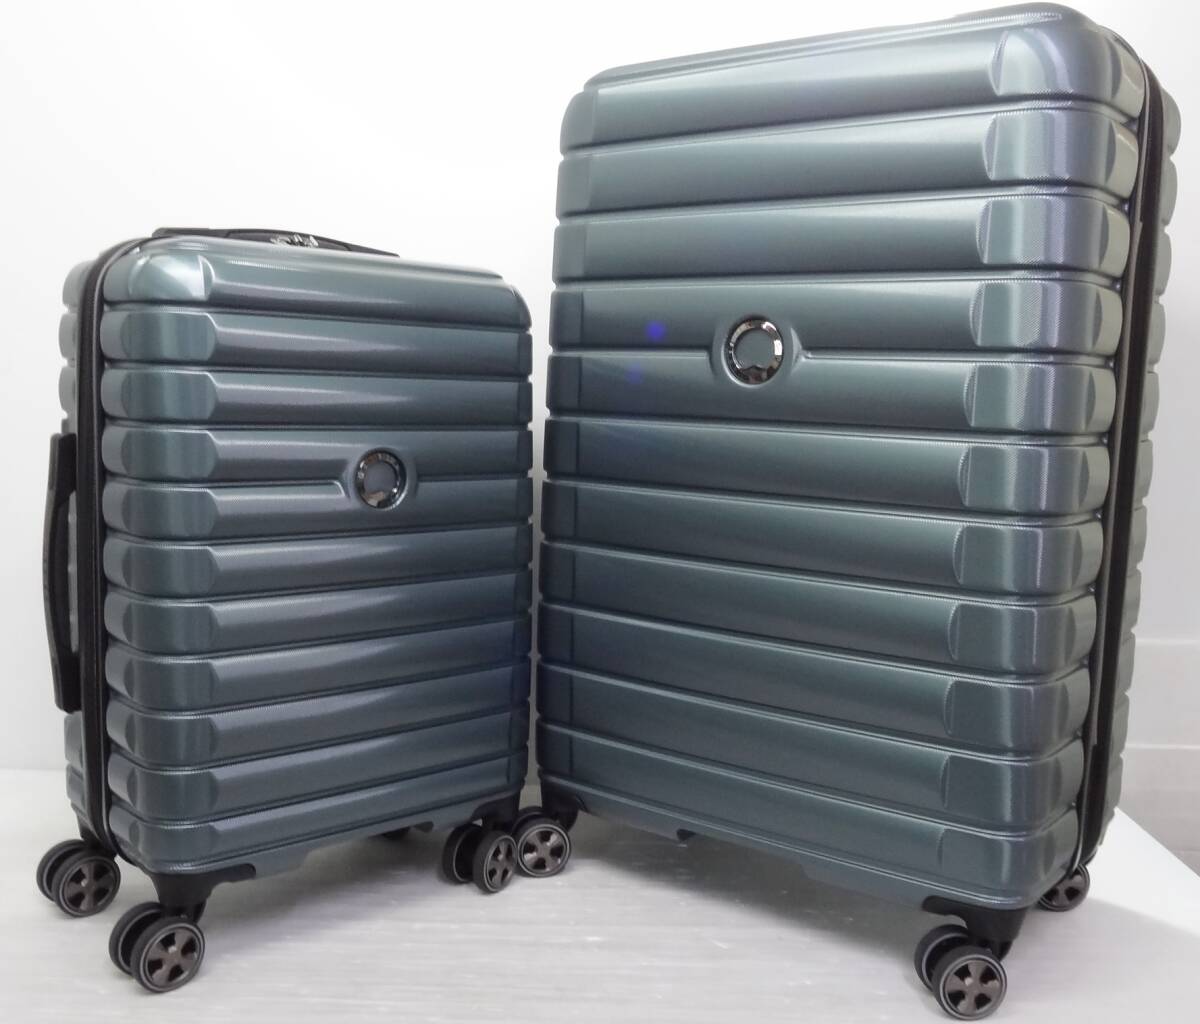 A0118 DELSEY PARIS スーツケース 2個セット (23インチ & 30インチ) グリーン 2622194 